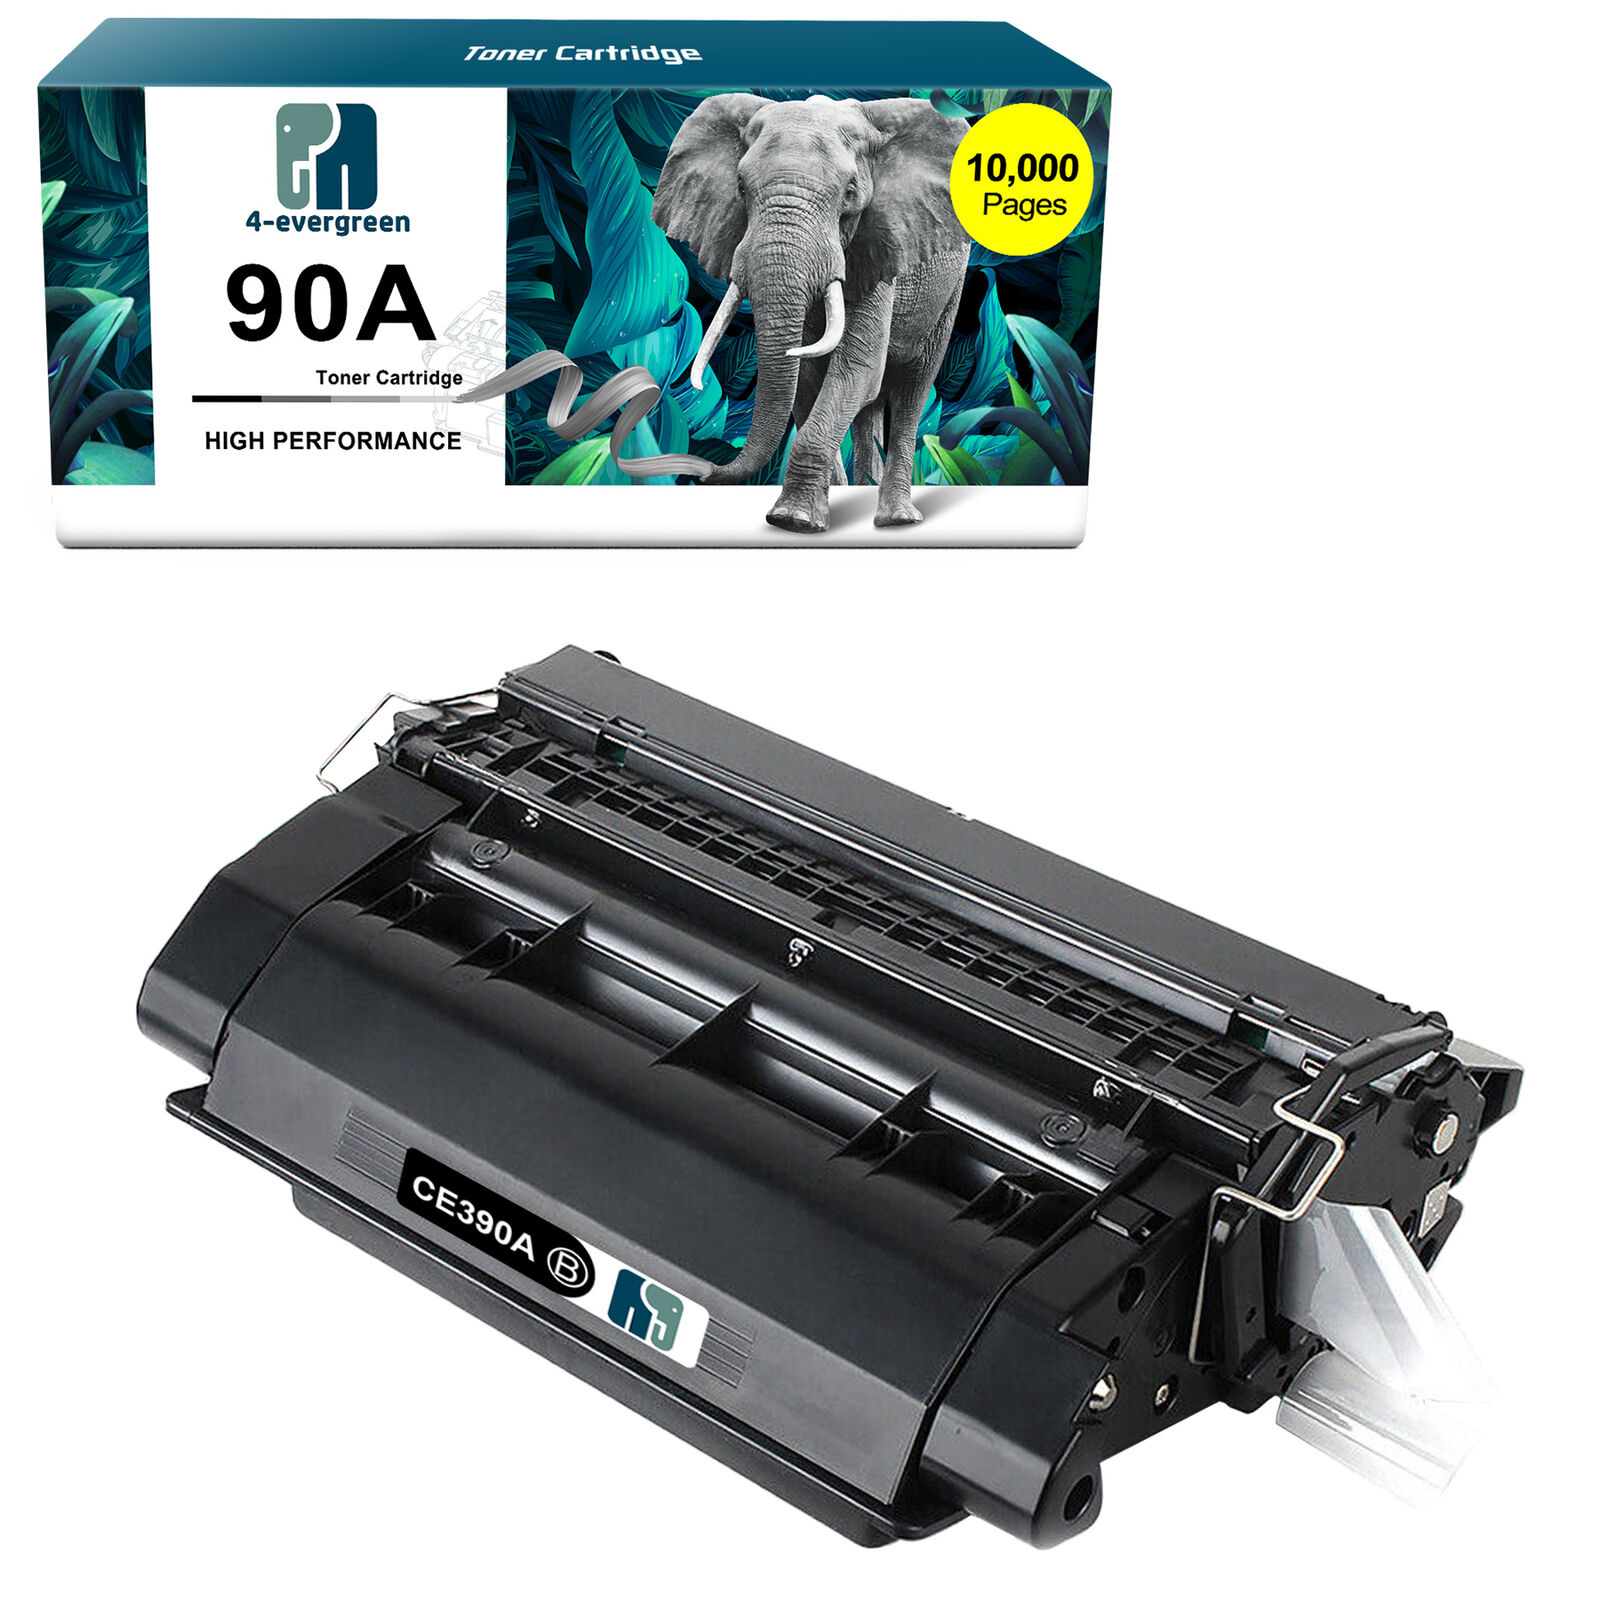 CE390A Toner Cartridge replacement for HP Enterprise M602 series 600 M601 Lot